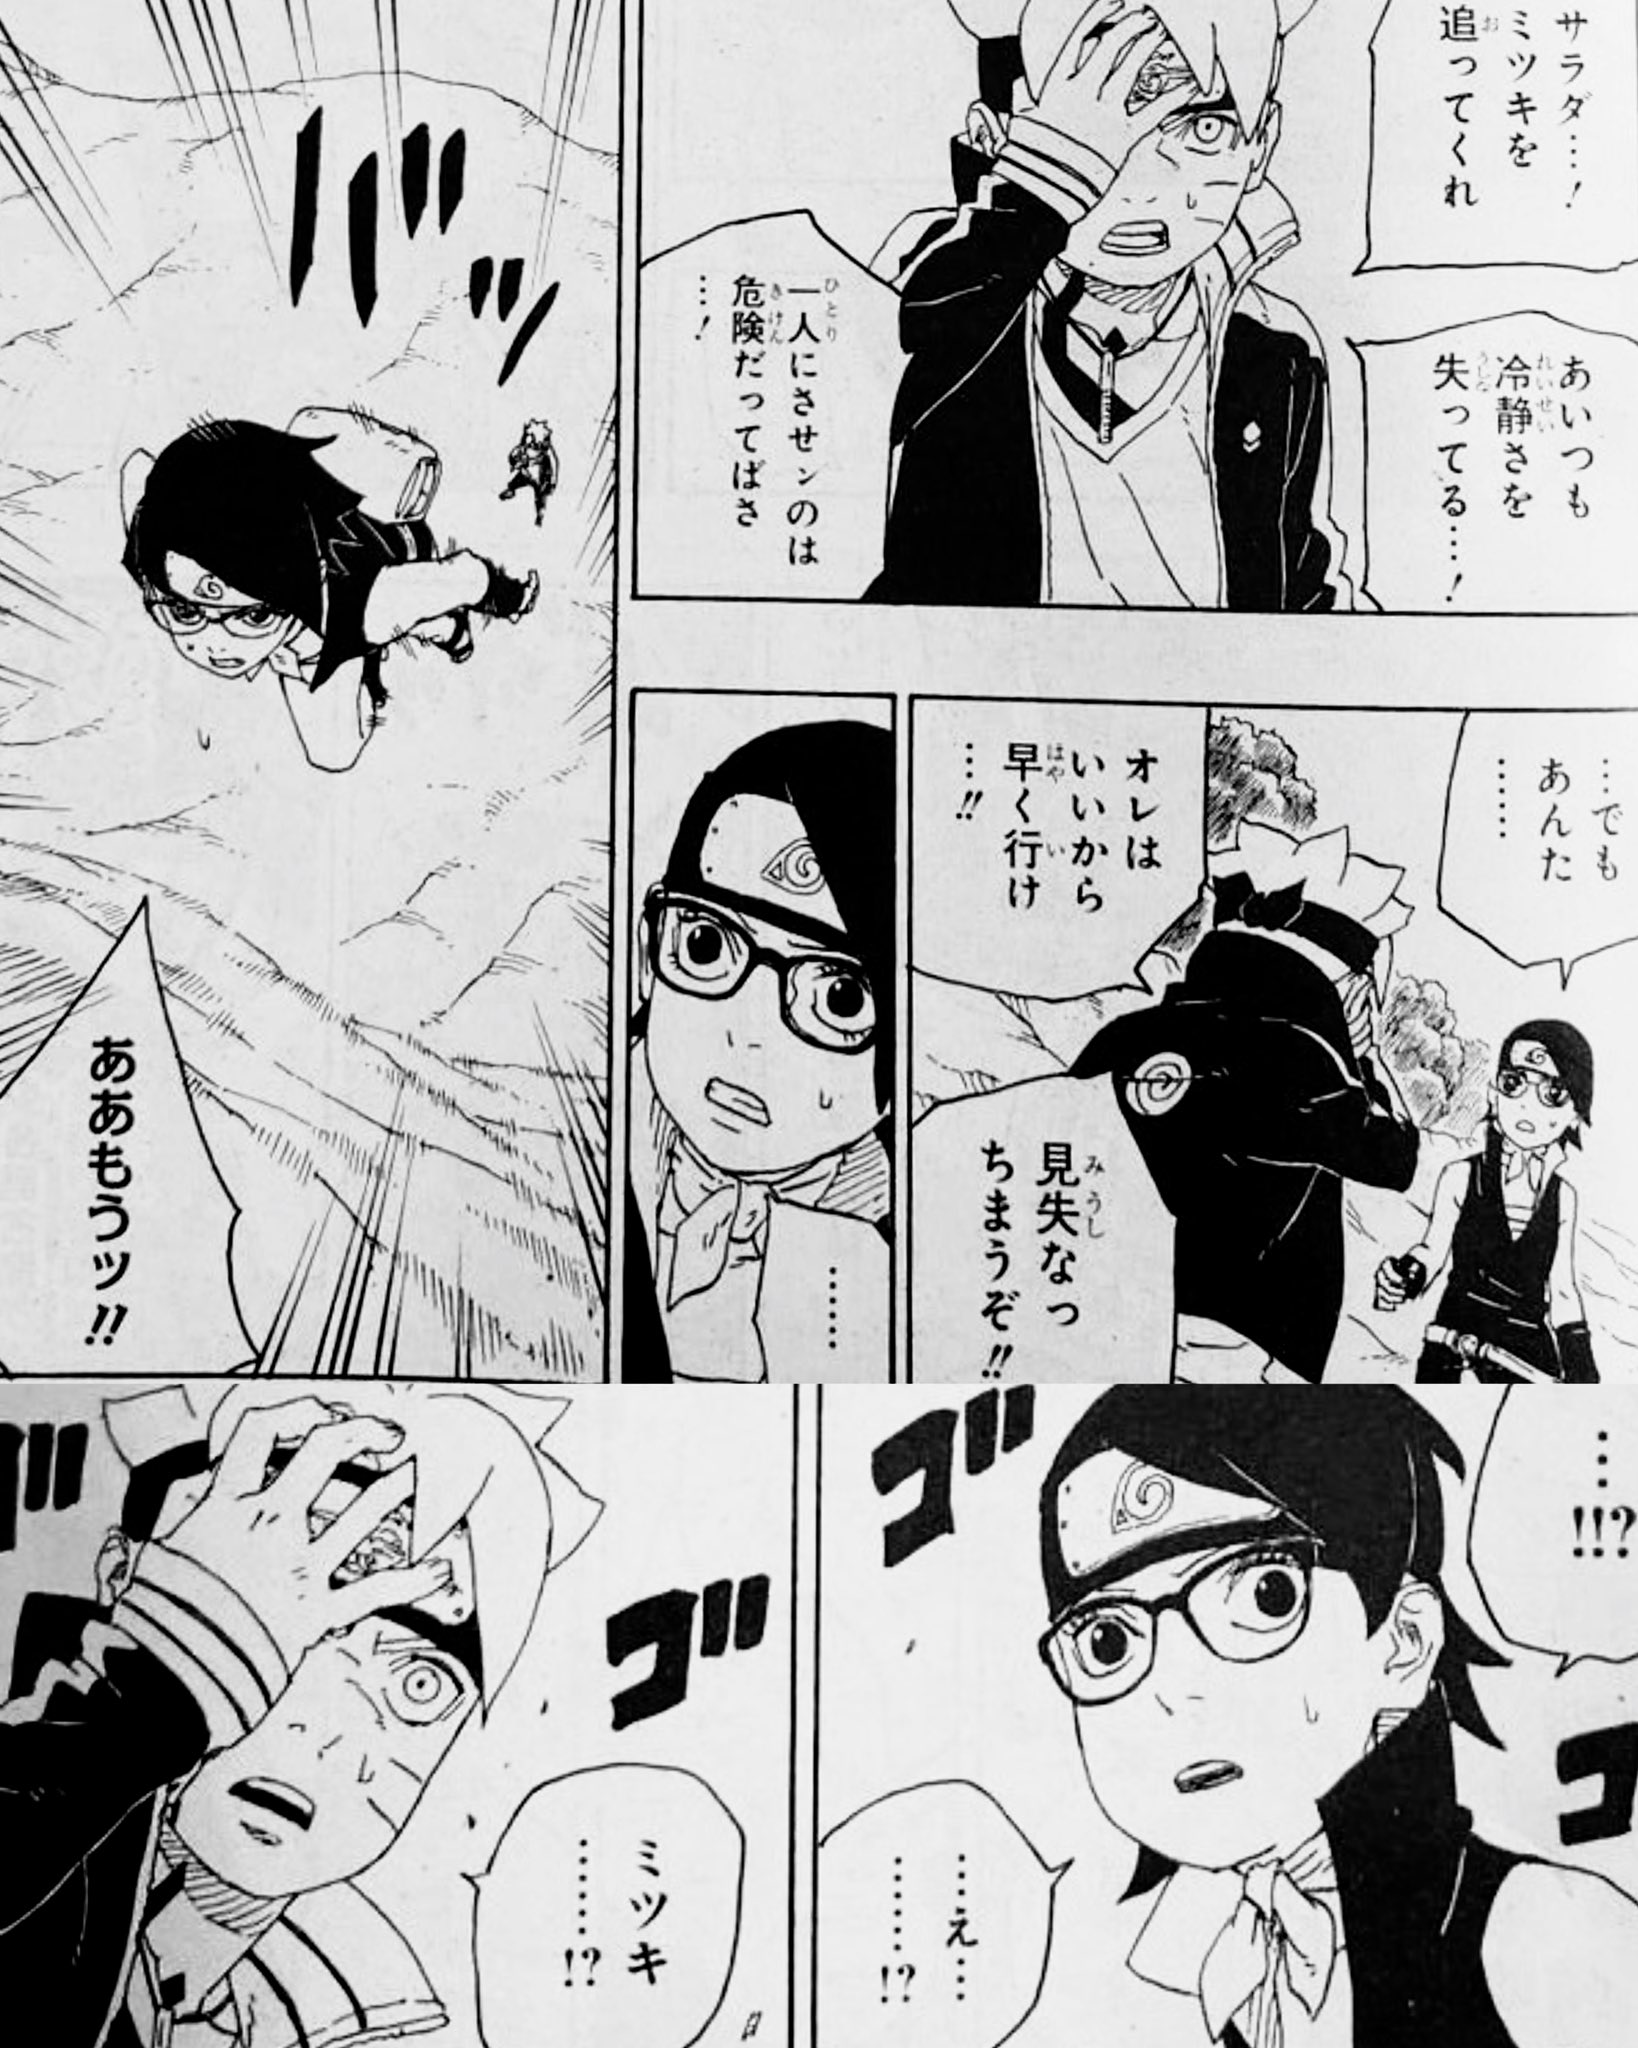 Boruto chapter 79 Release Date: 'Boruto' manga series chapter 79